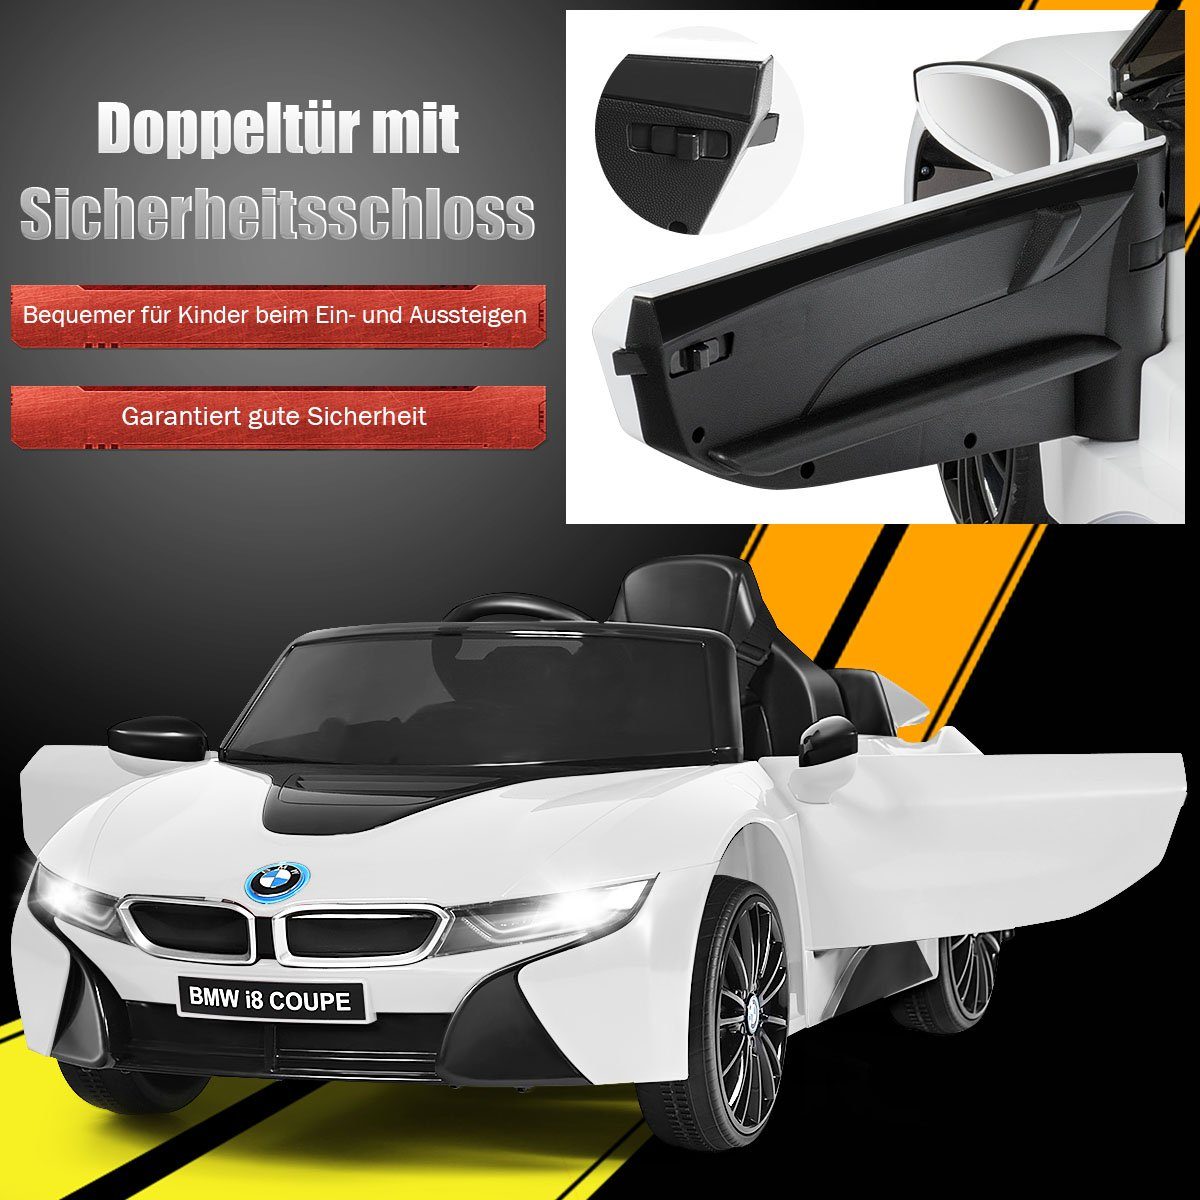 LED 12V, COSTWAY BMW Elektro-Kinderauto weiß mit